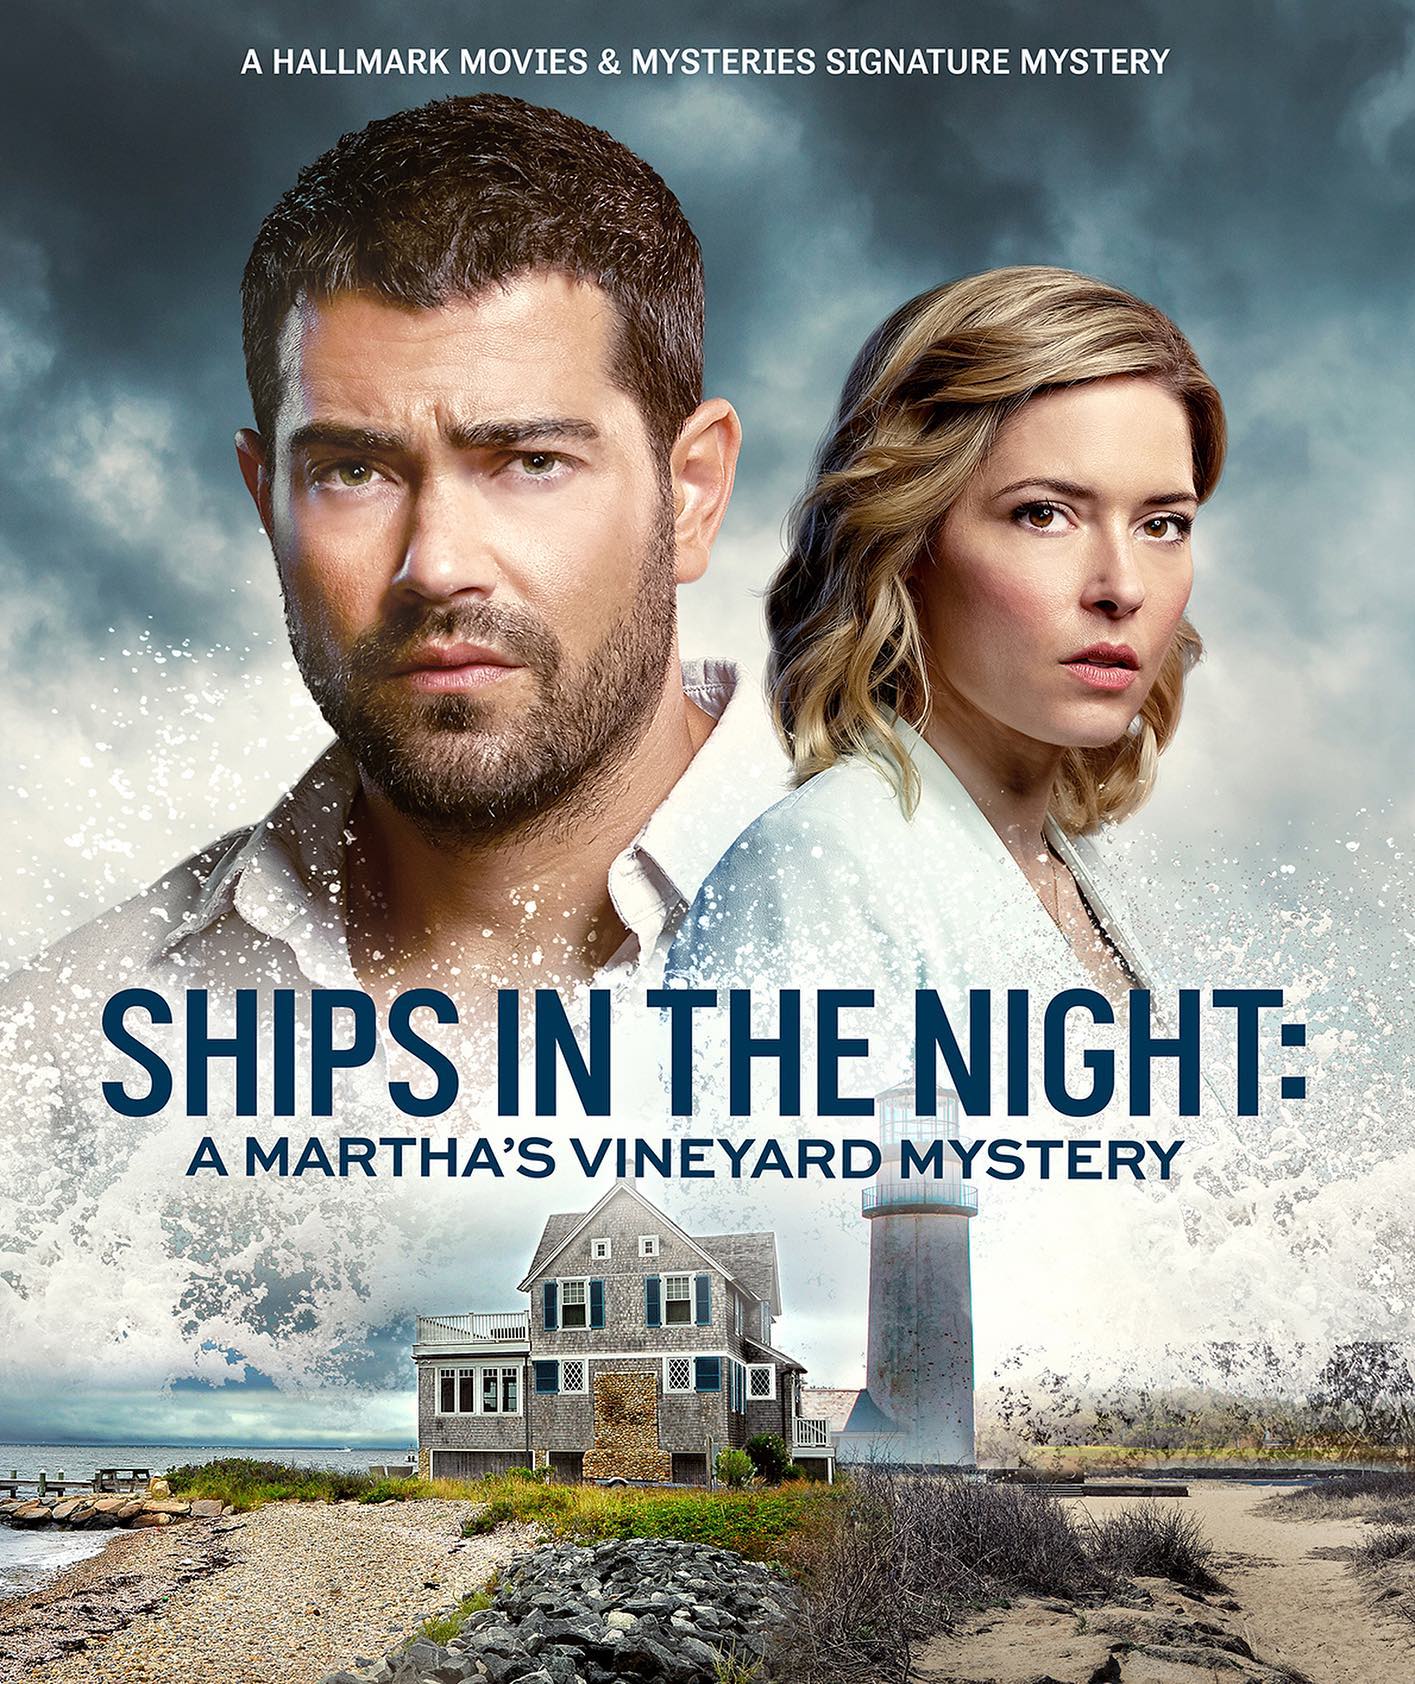 'Ships In The Night A Martha's Vineyard Mystery' premiers on Hallmark